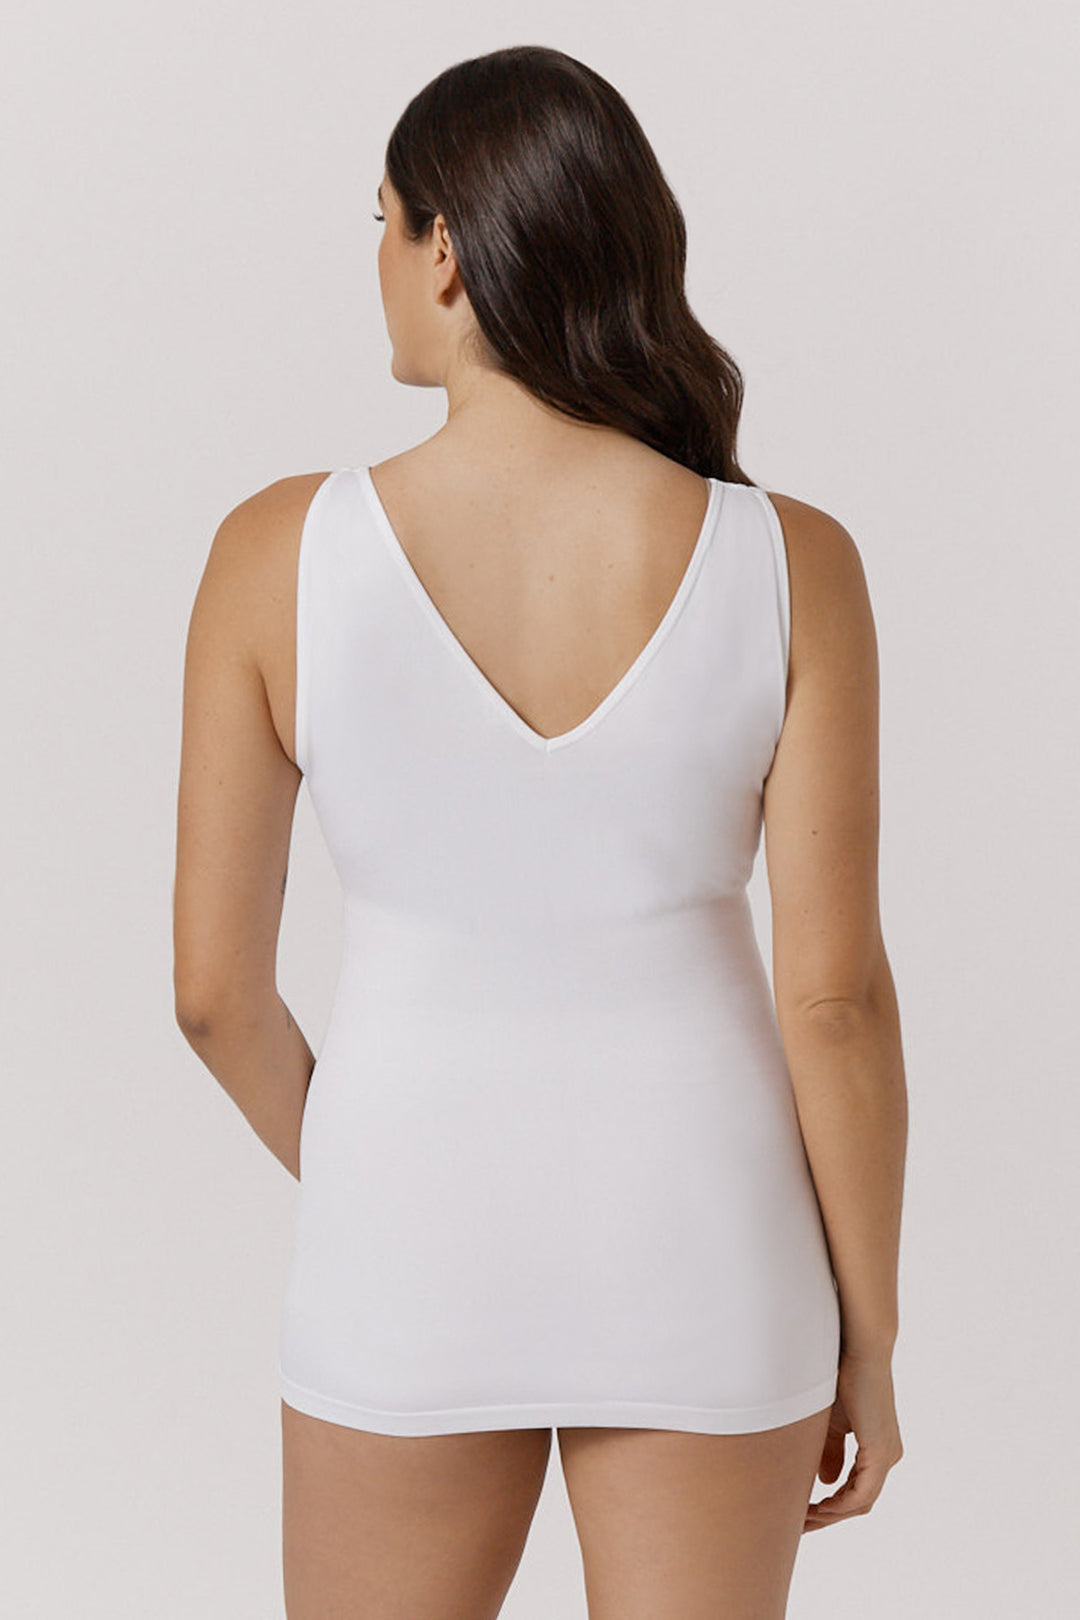 Women's comfortable Reversible Neckline, shaping and firming cami | Camyz Shapewear Smoothing Tank I Bella Bodies Australia I White | Back